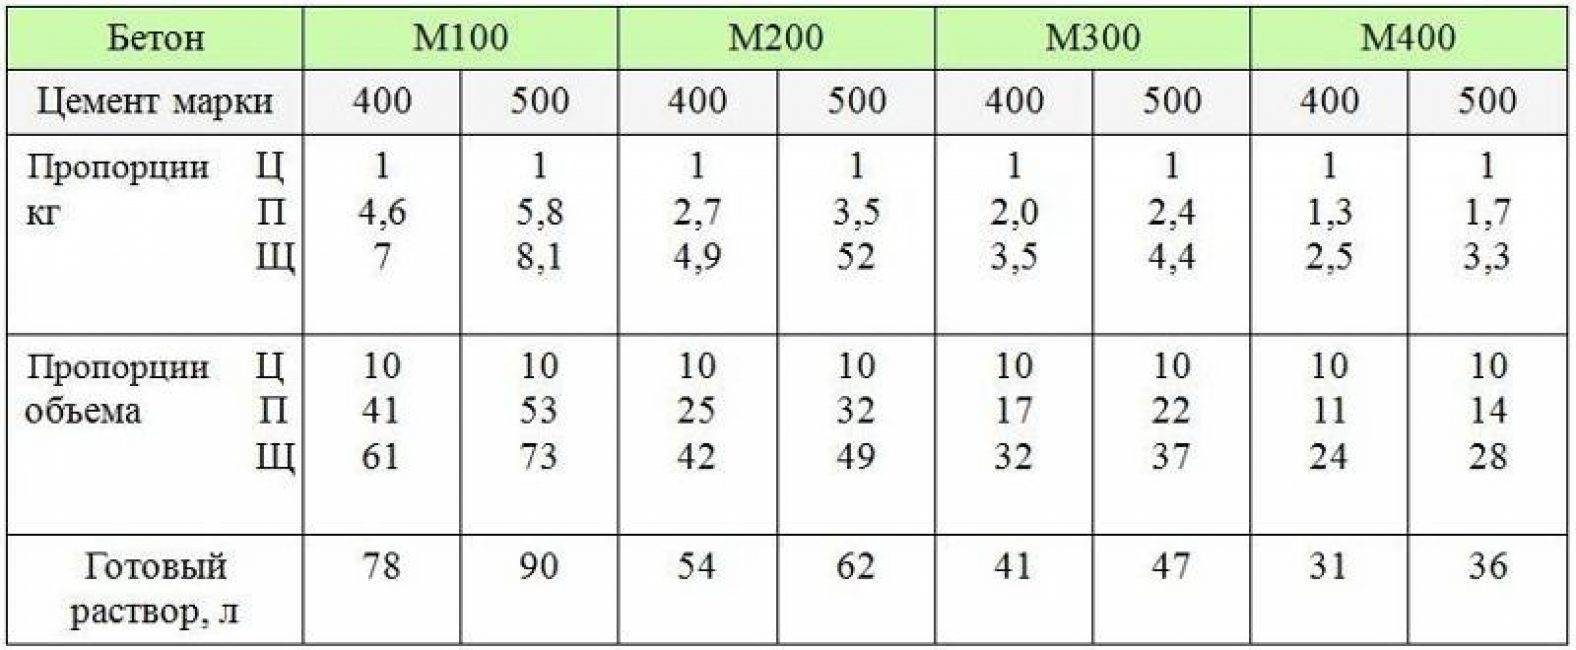 Бетон м300 — характеристики